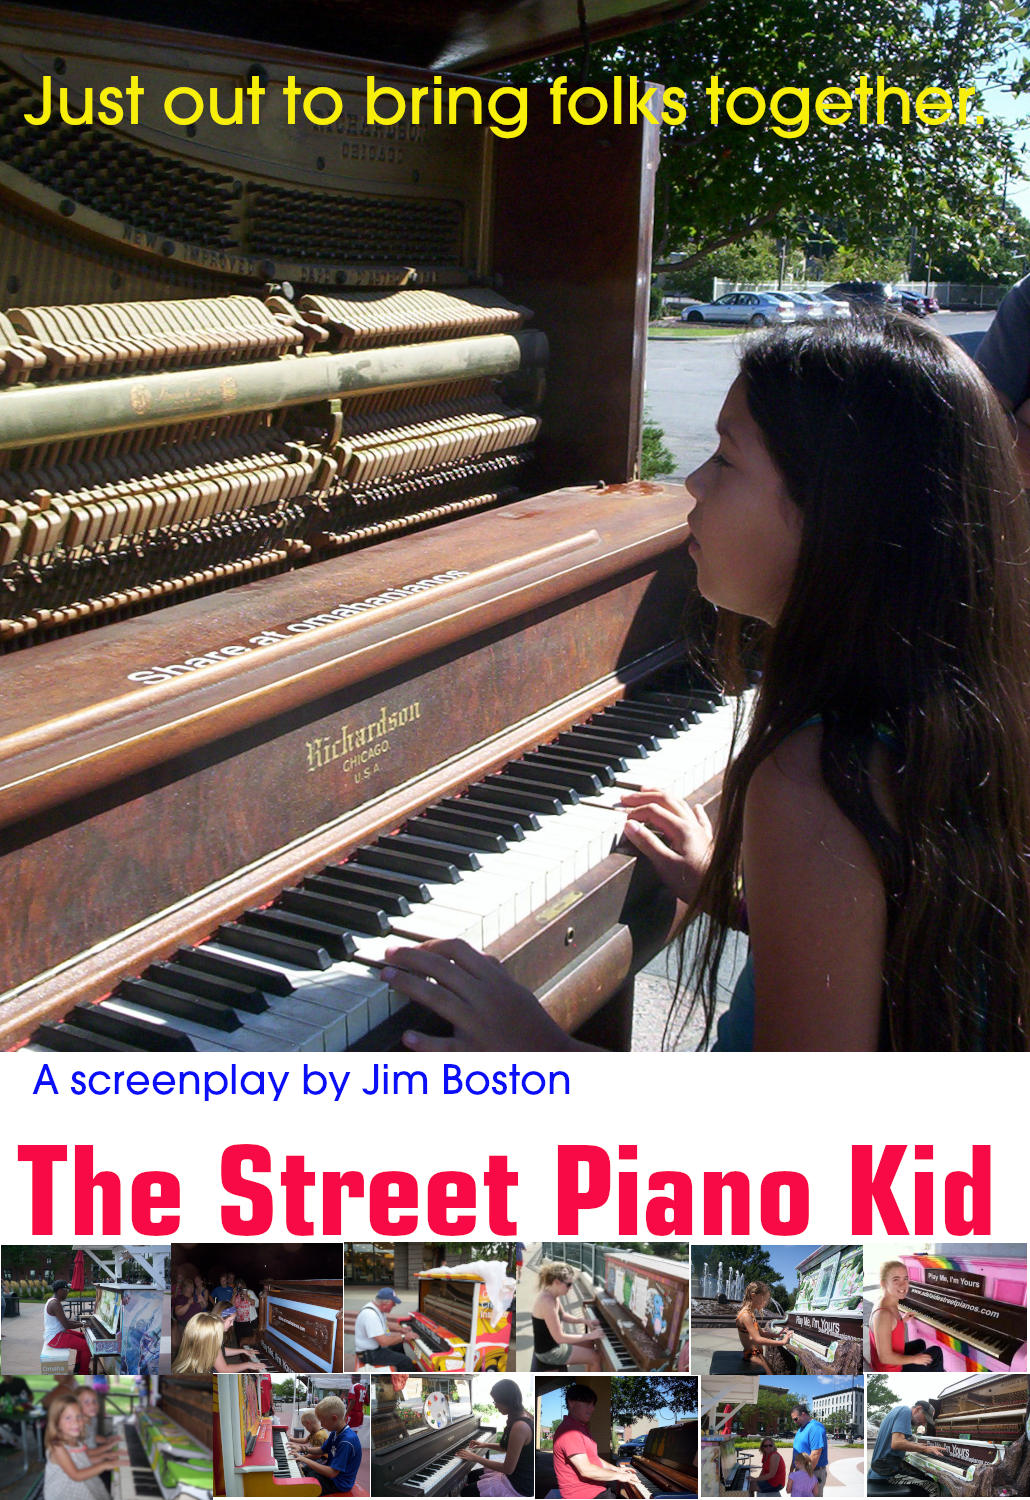 THE STREET PIANO KID